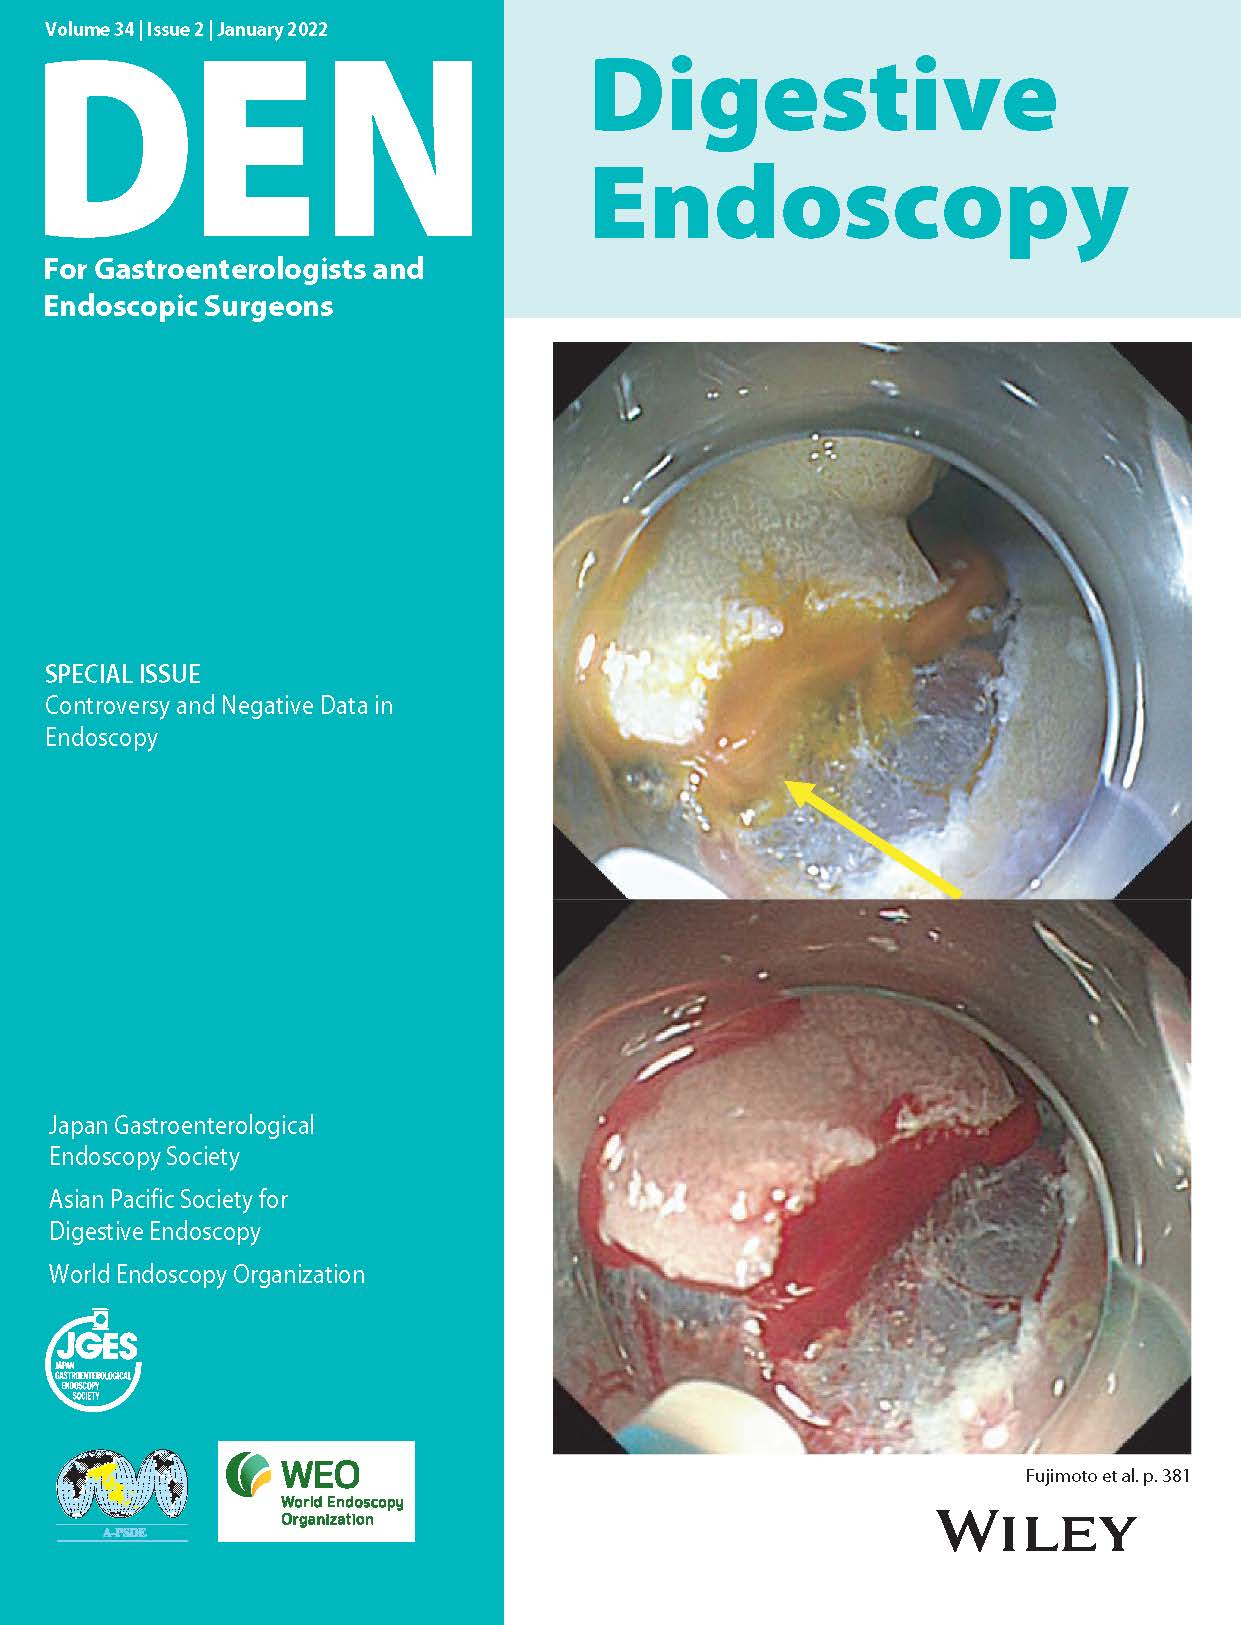 Digestive Endoscopy Vol34-2